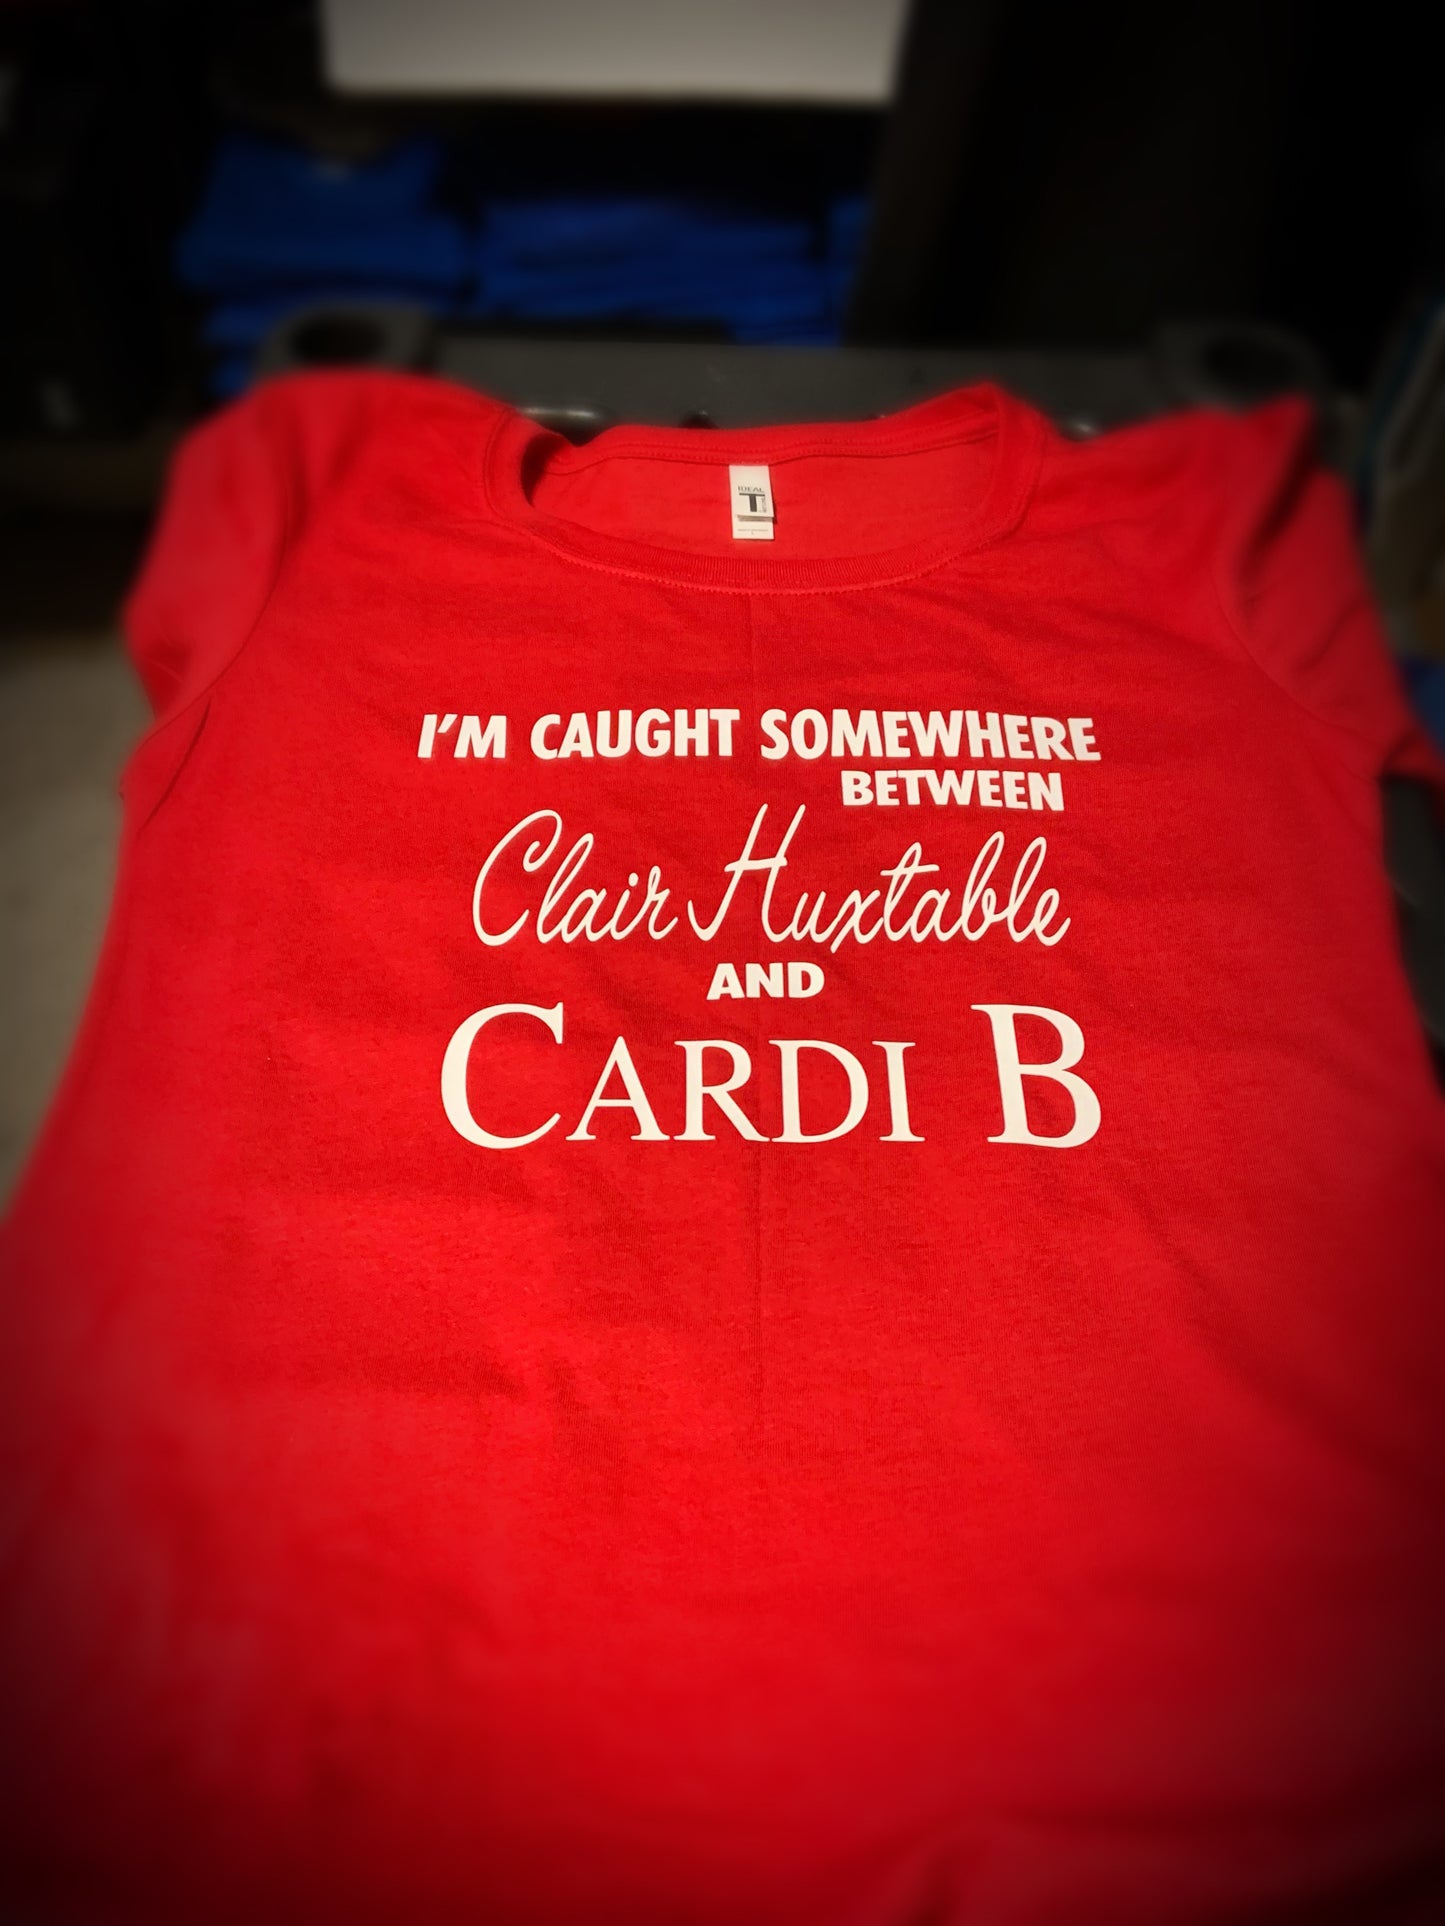 BLM - Between Clair and Cardi B T-Shirt